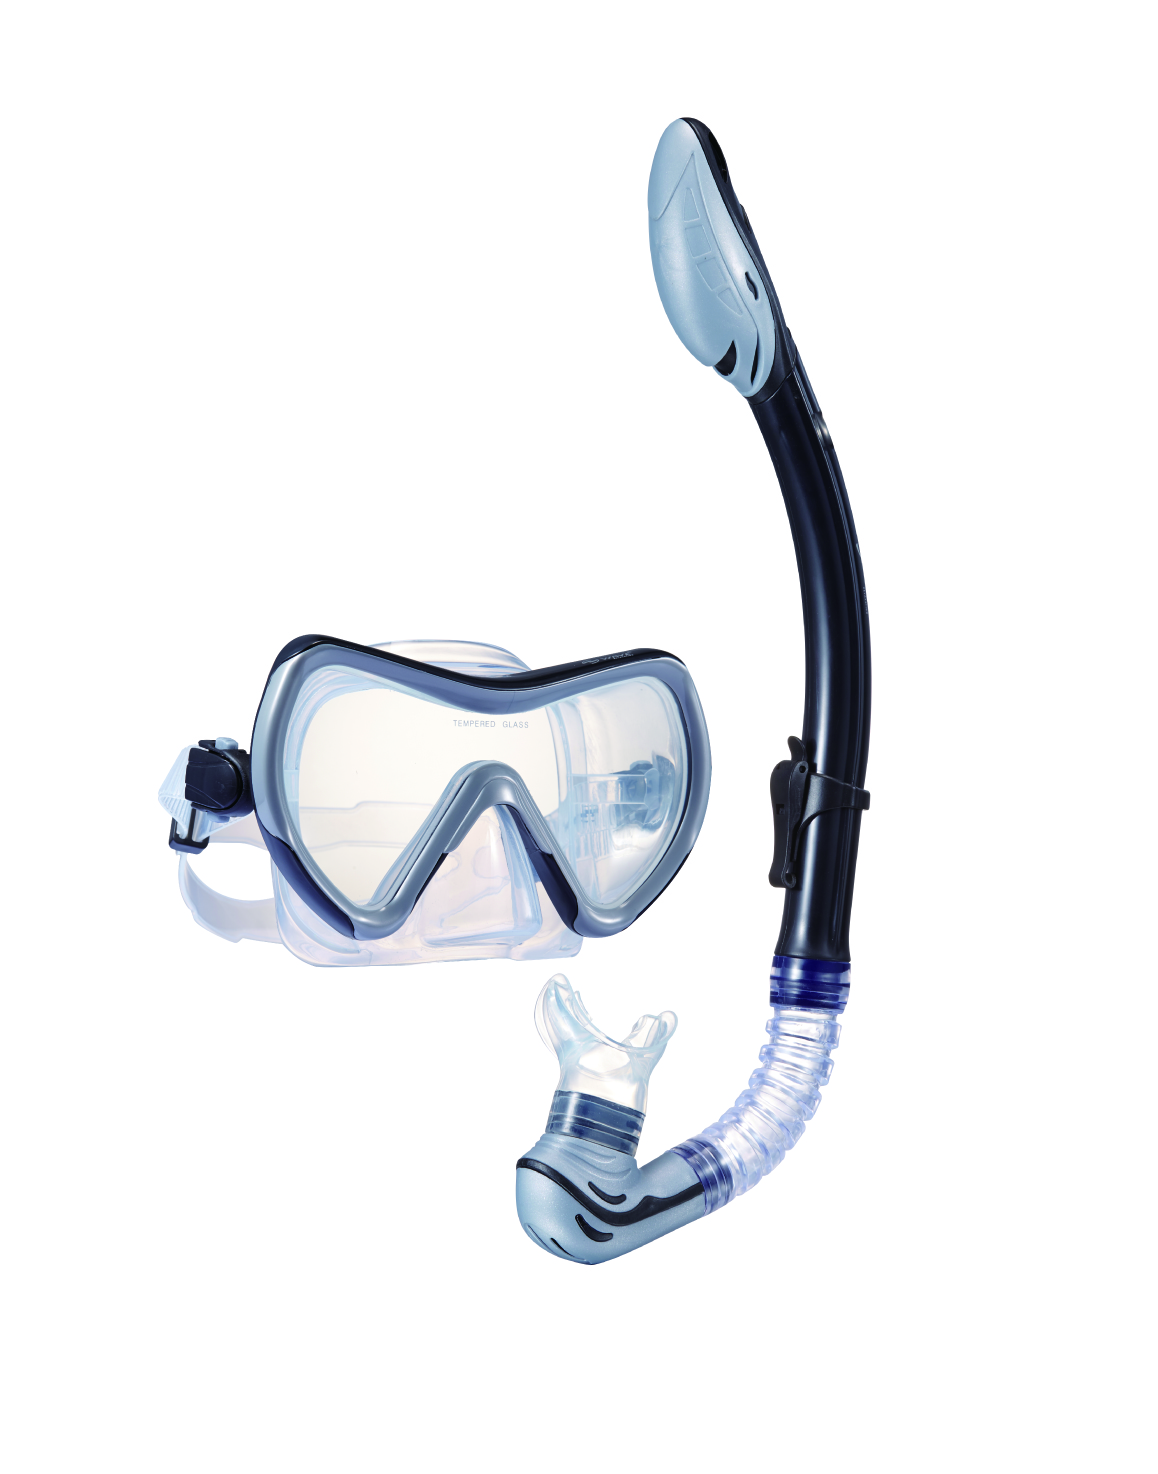 Pro for wave маска. Mask Snorkel Set PVC маска+трубка. Маска для плавания Wave m-1314. Маска для плавания Wave m-1328. Маска с трубкой Советская.